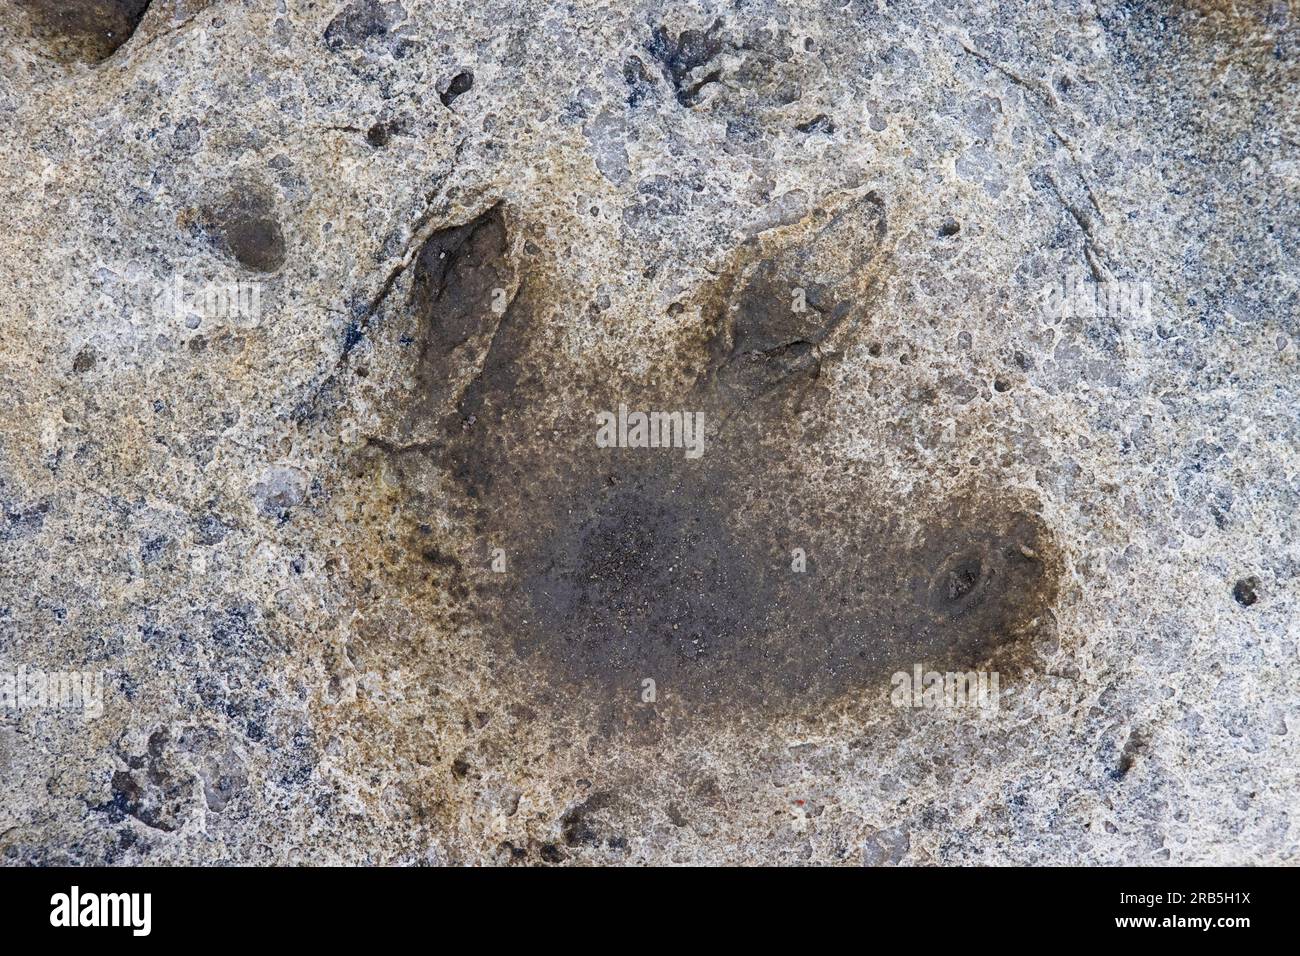 Ornithopod footprint in sandstone at the Lower Cretaceous dinosaur tracksite at Boltodden, Kvalvagen, Svalbard / Spitsbergen, Norway Stock Photo